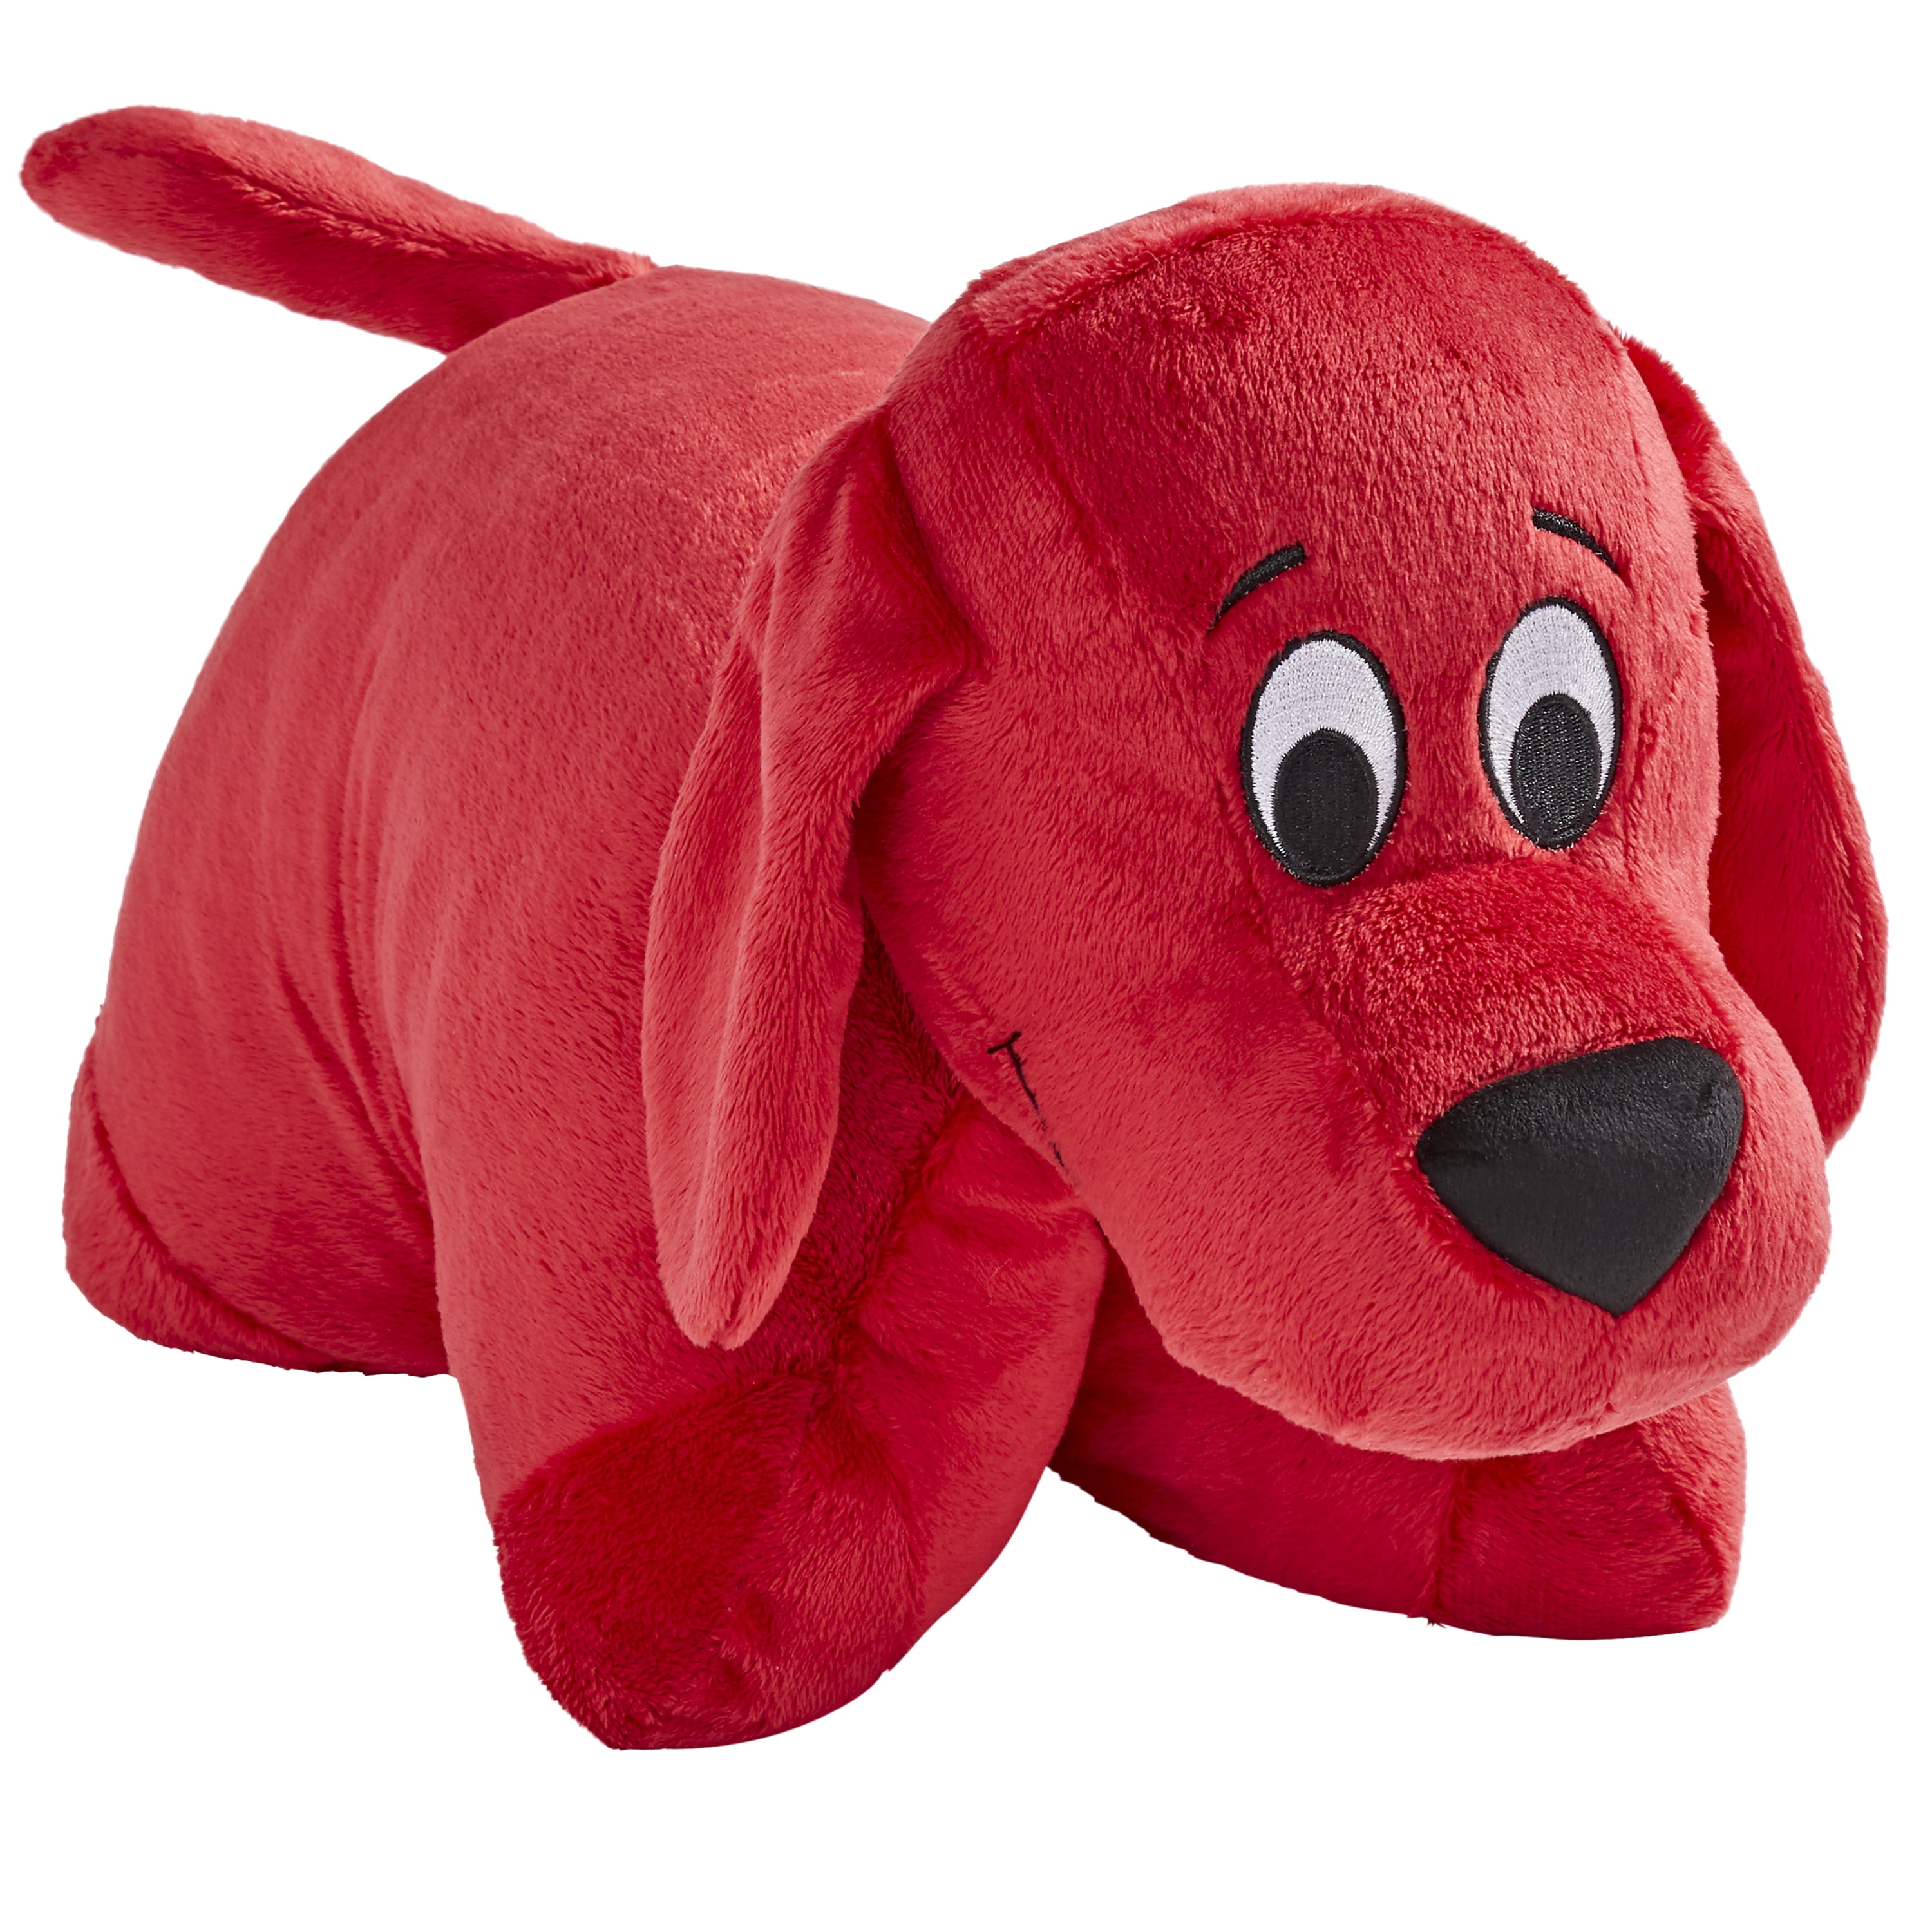 Big Red Dog Stuffed Animal Plush Toy 